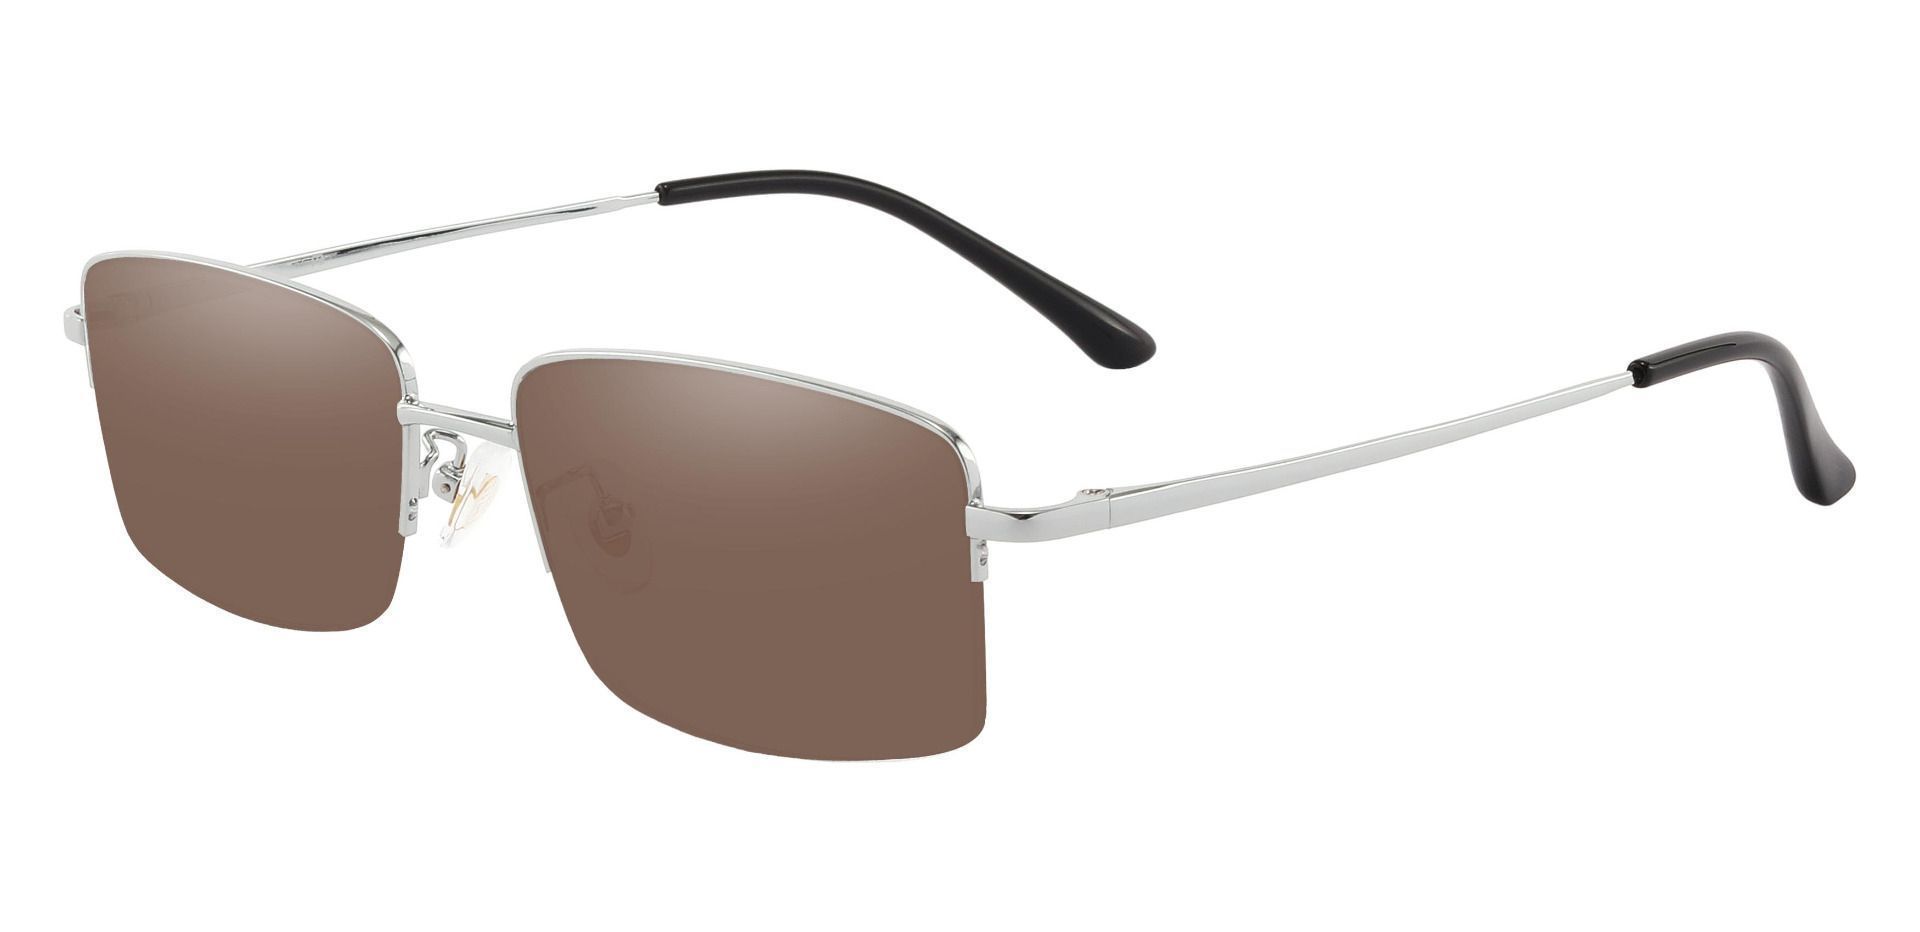 Bellmont Rectangle Progressive Sunglasses - Silver Frame With Brown Lenses